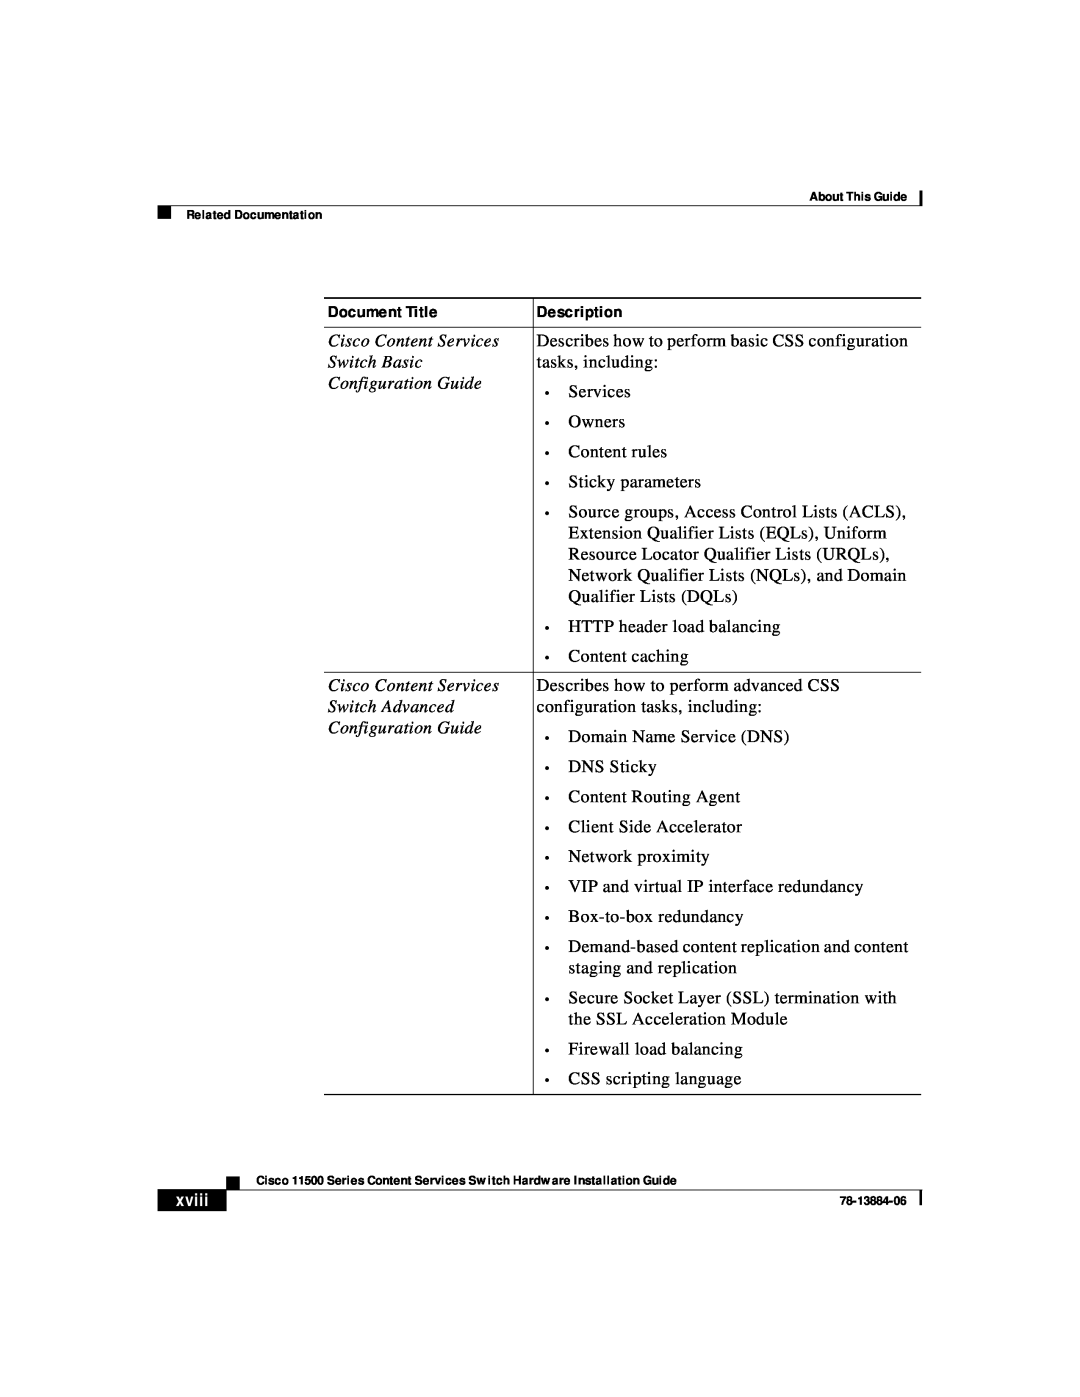 Cisco Systems 11500 Series manual Document Title, Description, xviii 